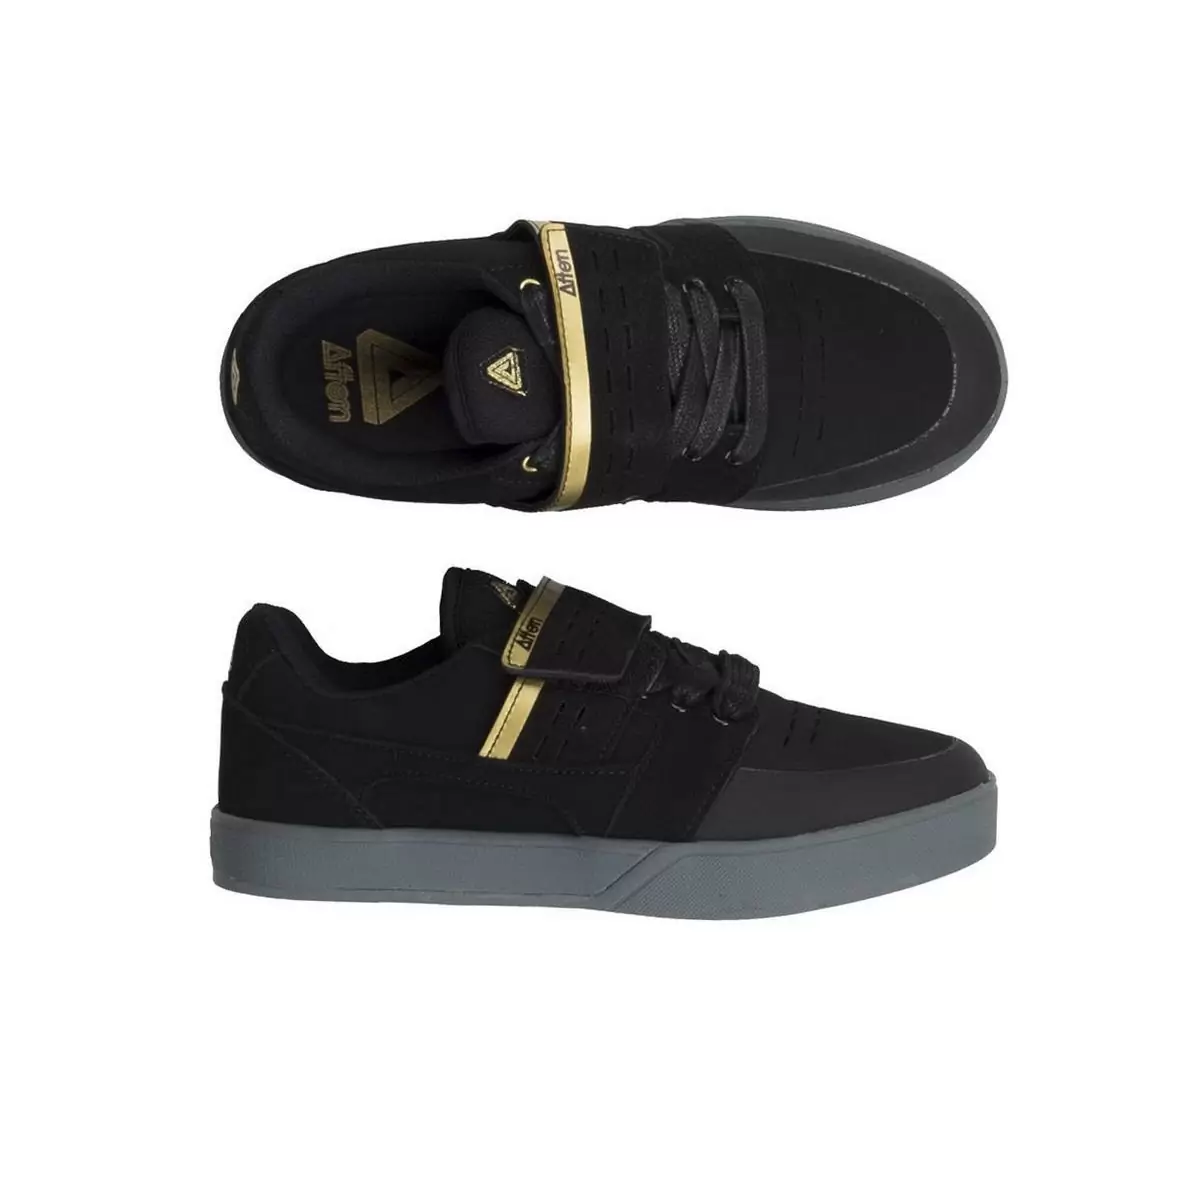 MTB Shoes Vectal SPD Black/Gold Size 43 - image